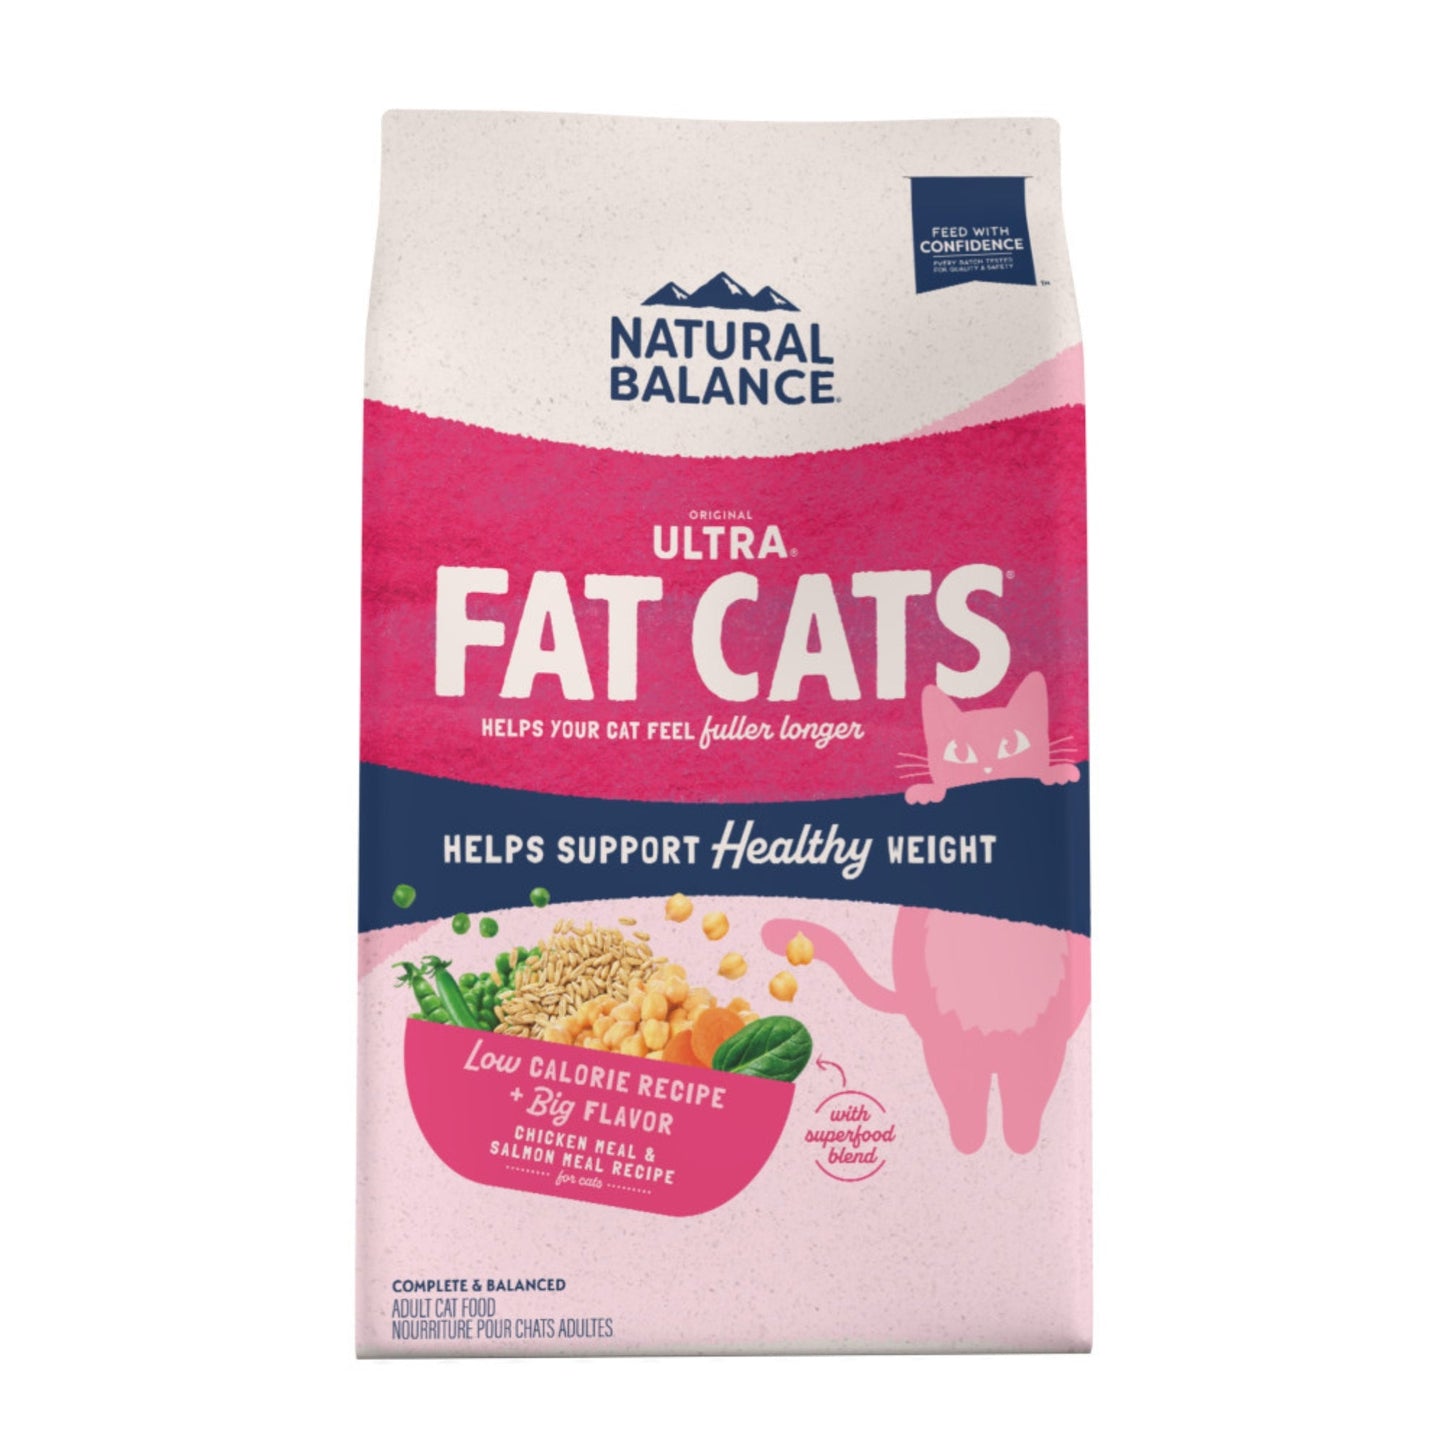 Natural Balance Pet Foods Ultra Fat Cats Dry Cat Food Chicken & Salmon, 1ea/6 lb